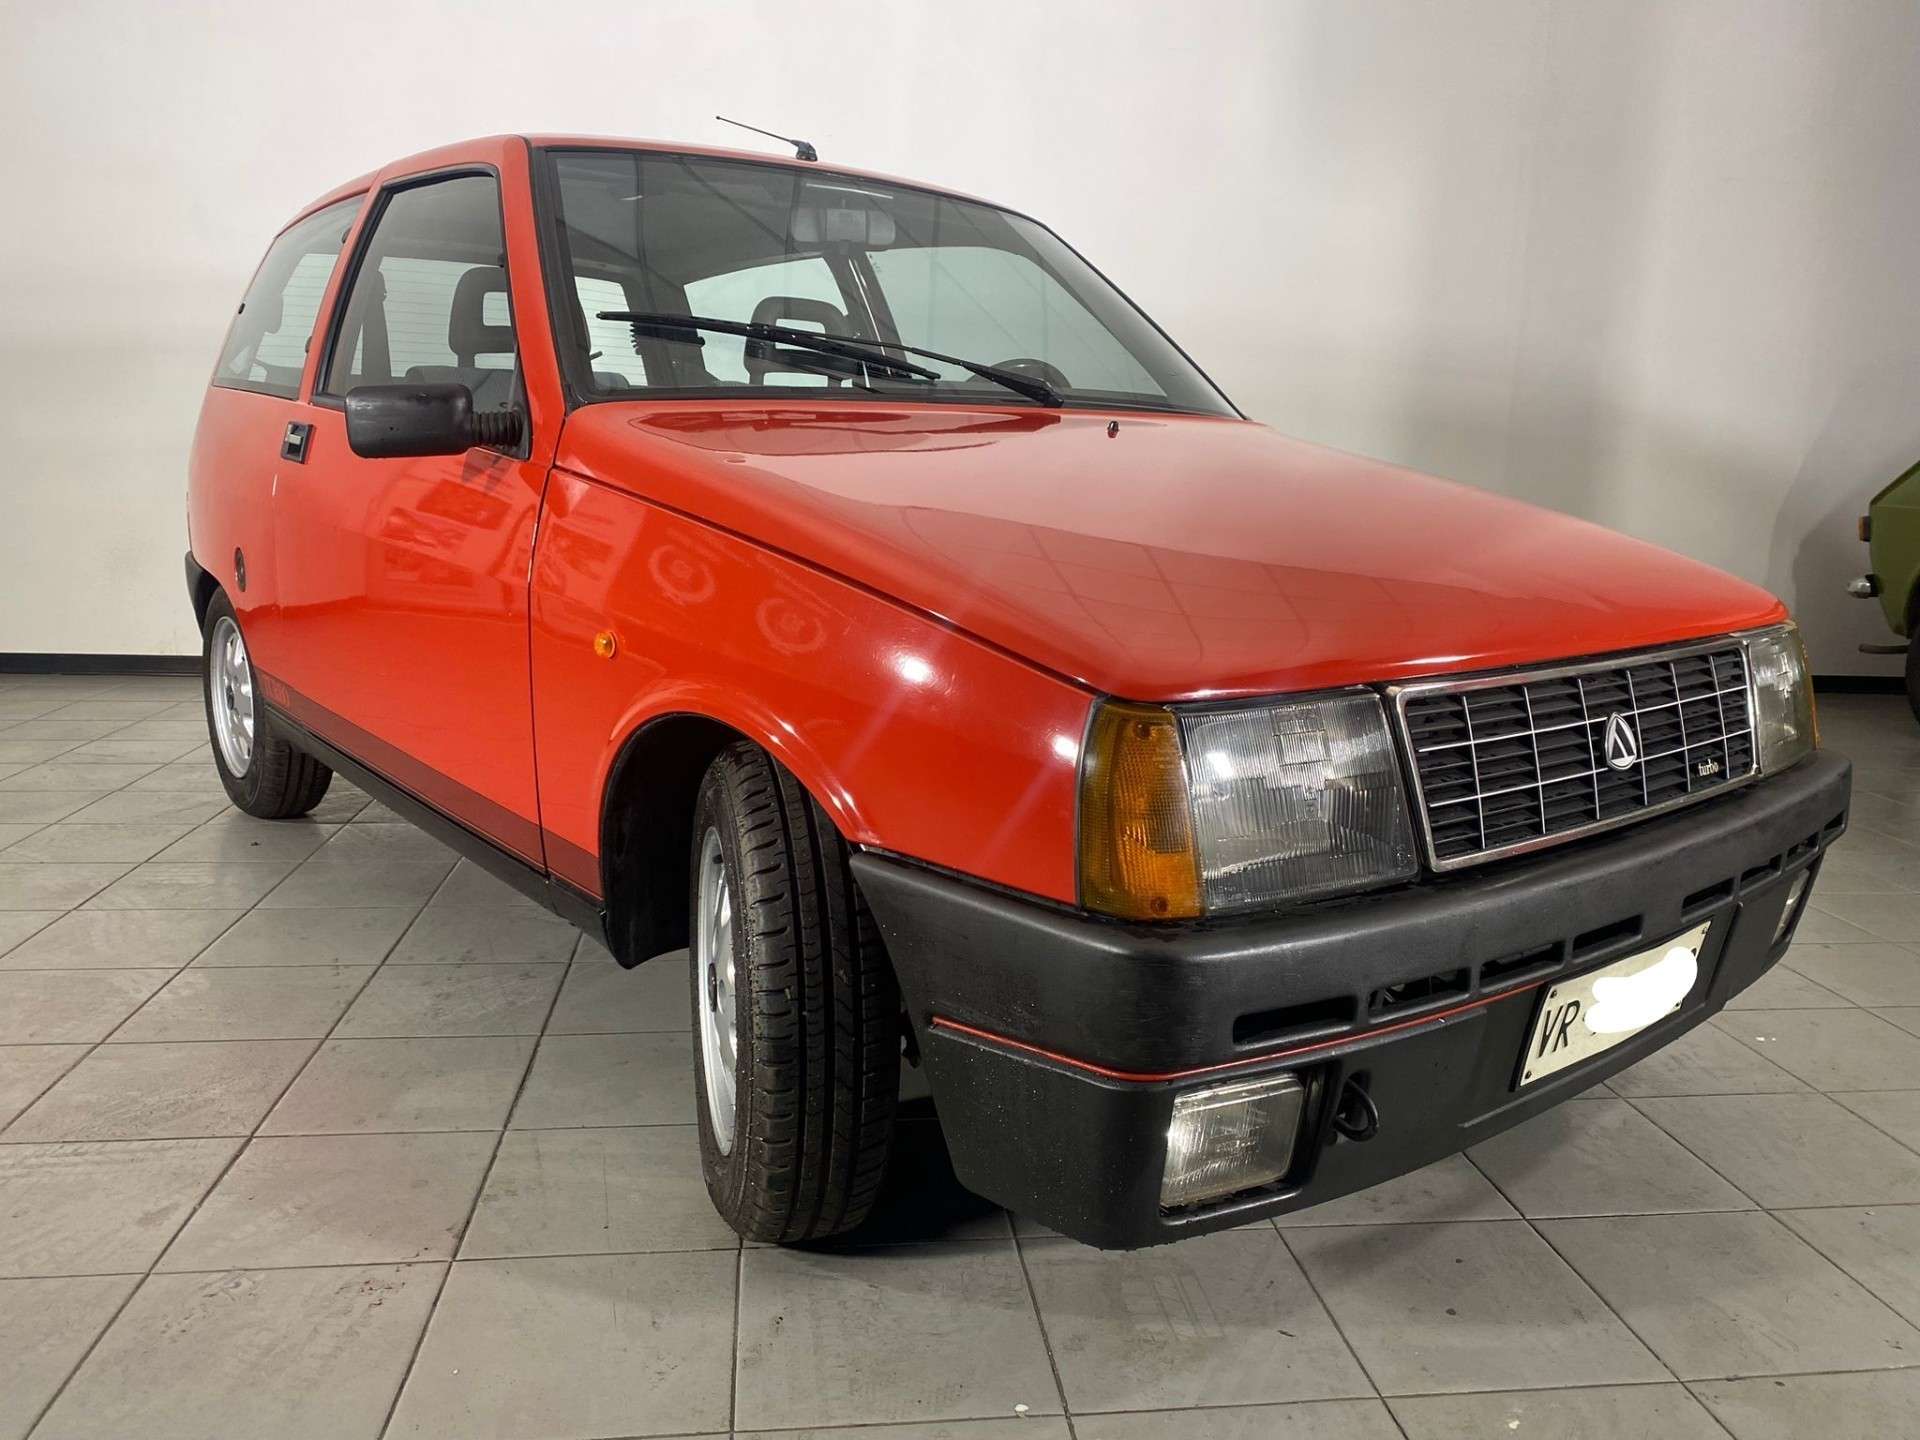 Autobianchi Y10 Sedan in Red antique / classic in Pistoia - Pt for € 11,900.-